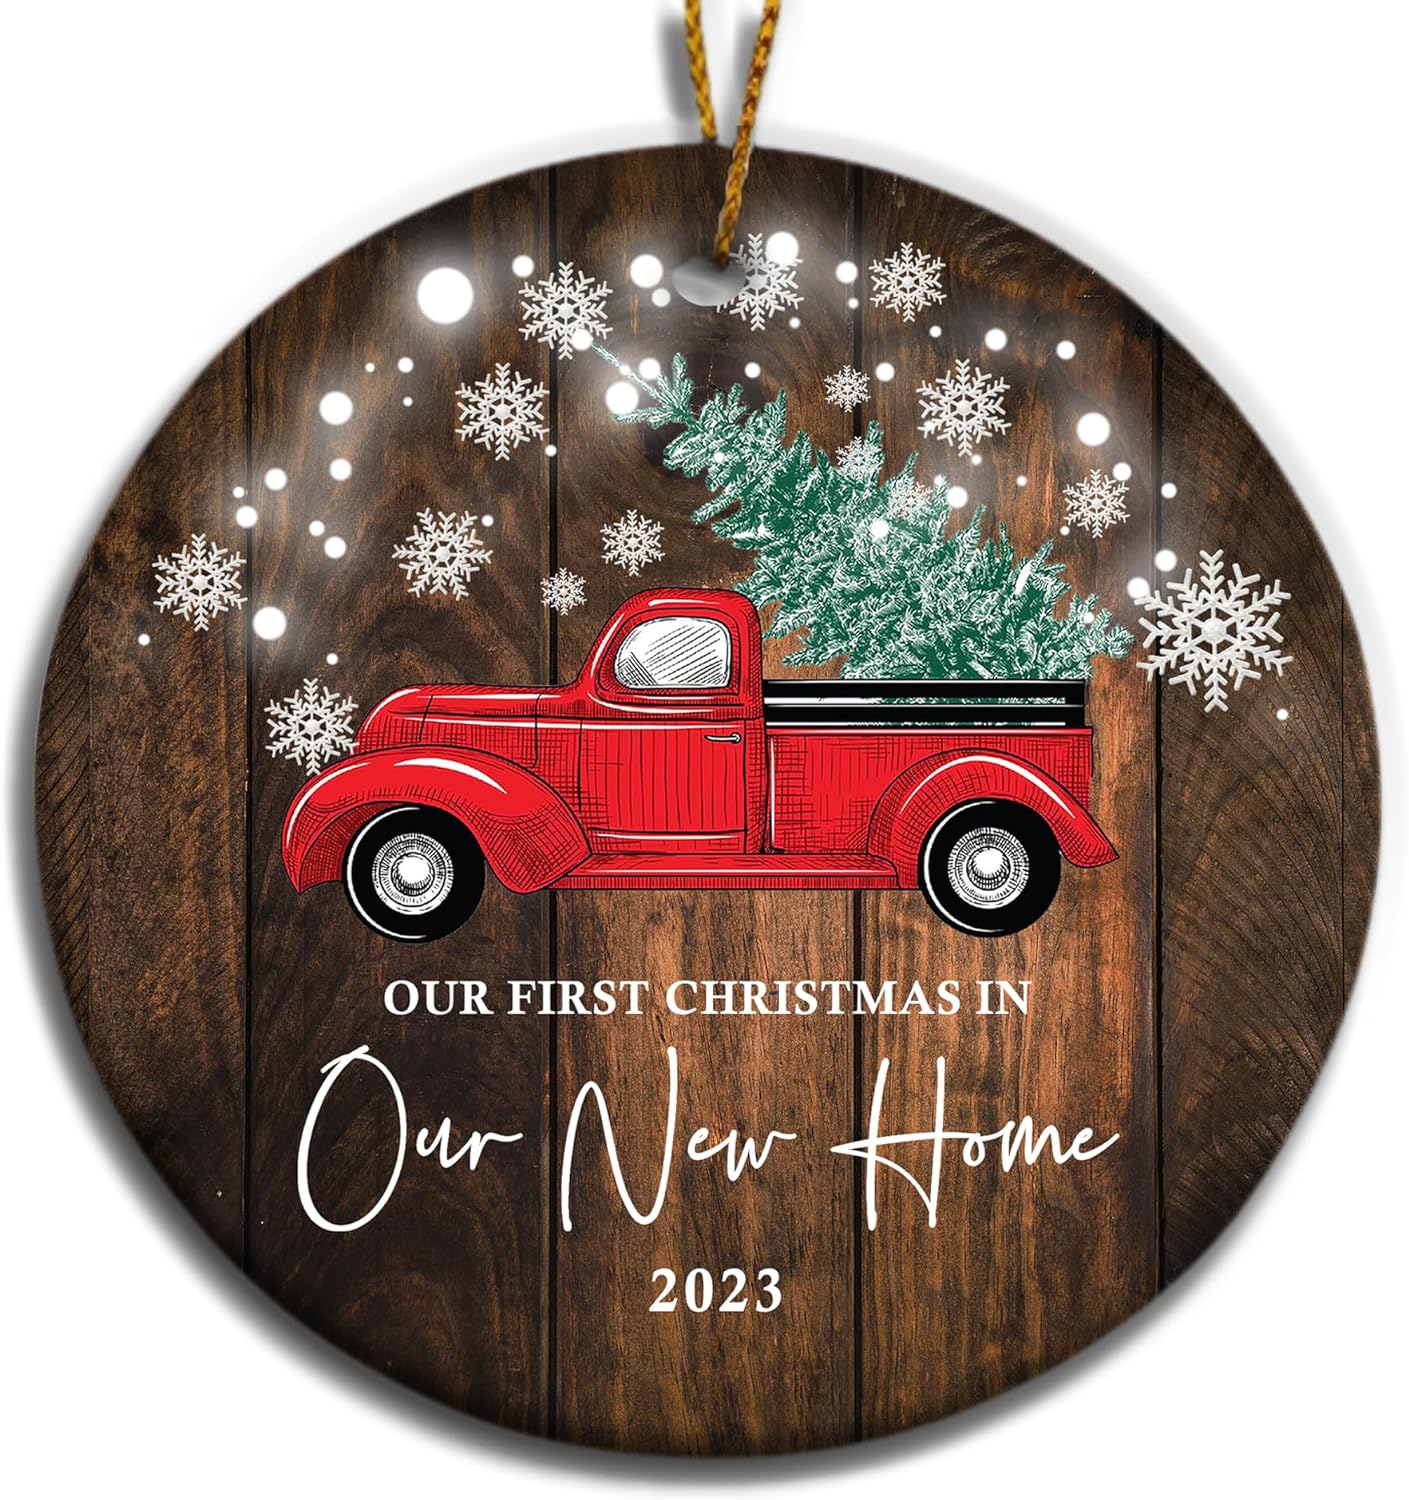 Vivulla68 New Home Ornament 2023, New Home Christmas Ornament 2023, First Christmas in Our New Home Ornament 2023, 1st Christmas in Our New Home 2023 for Christmas Tree, Red Truck Christmas Ornament